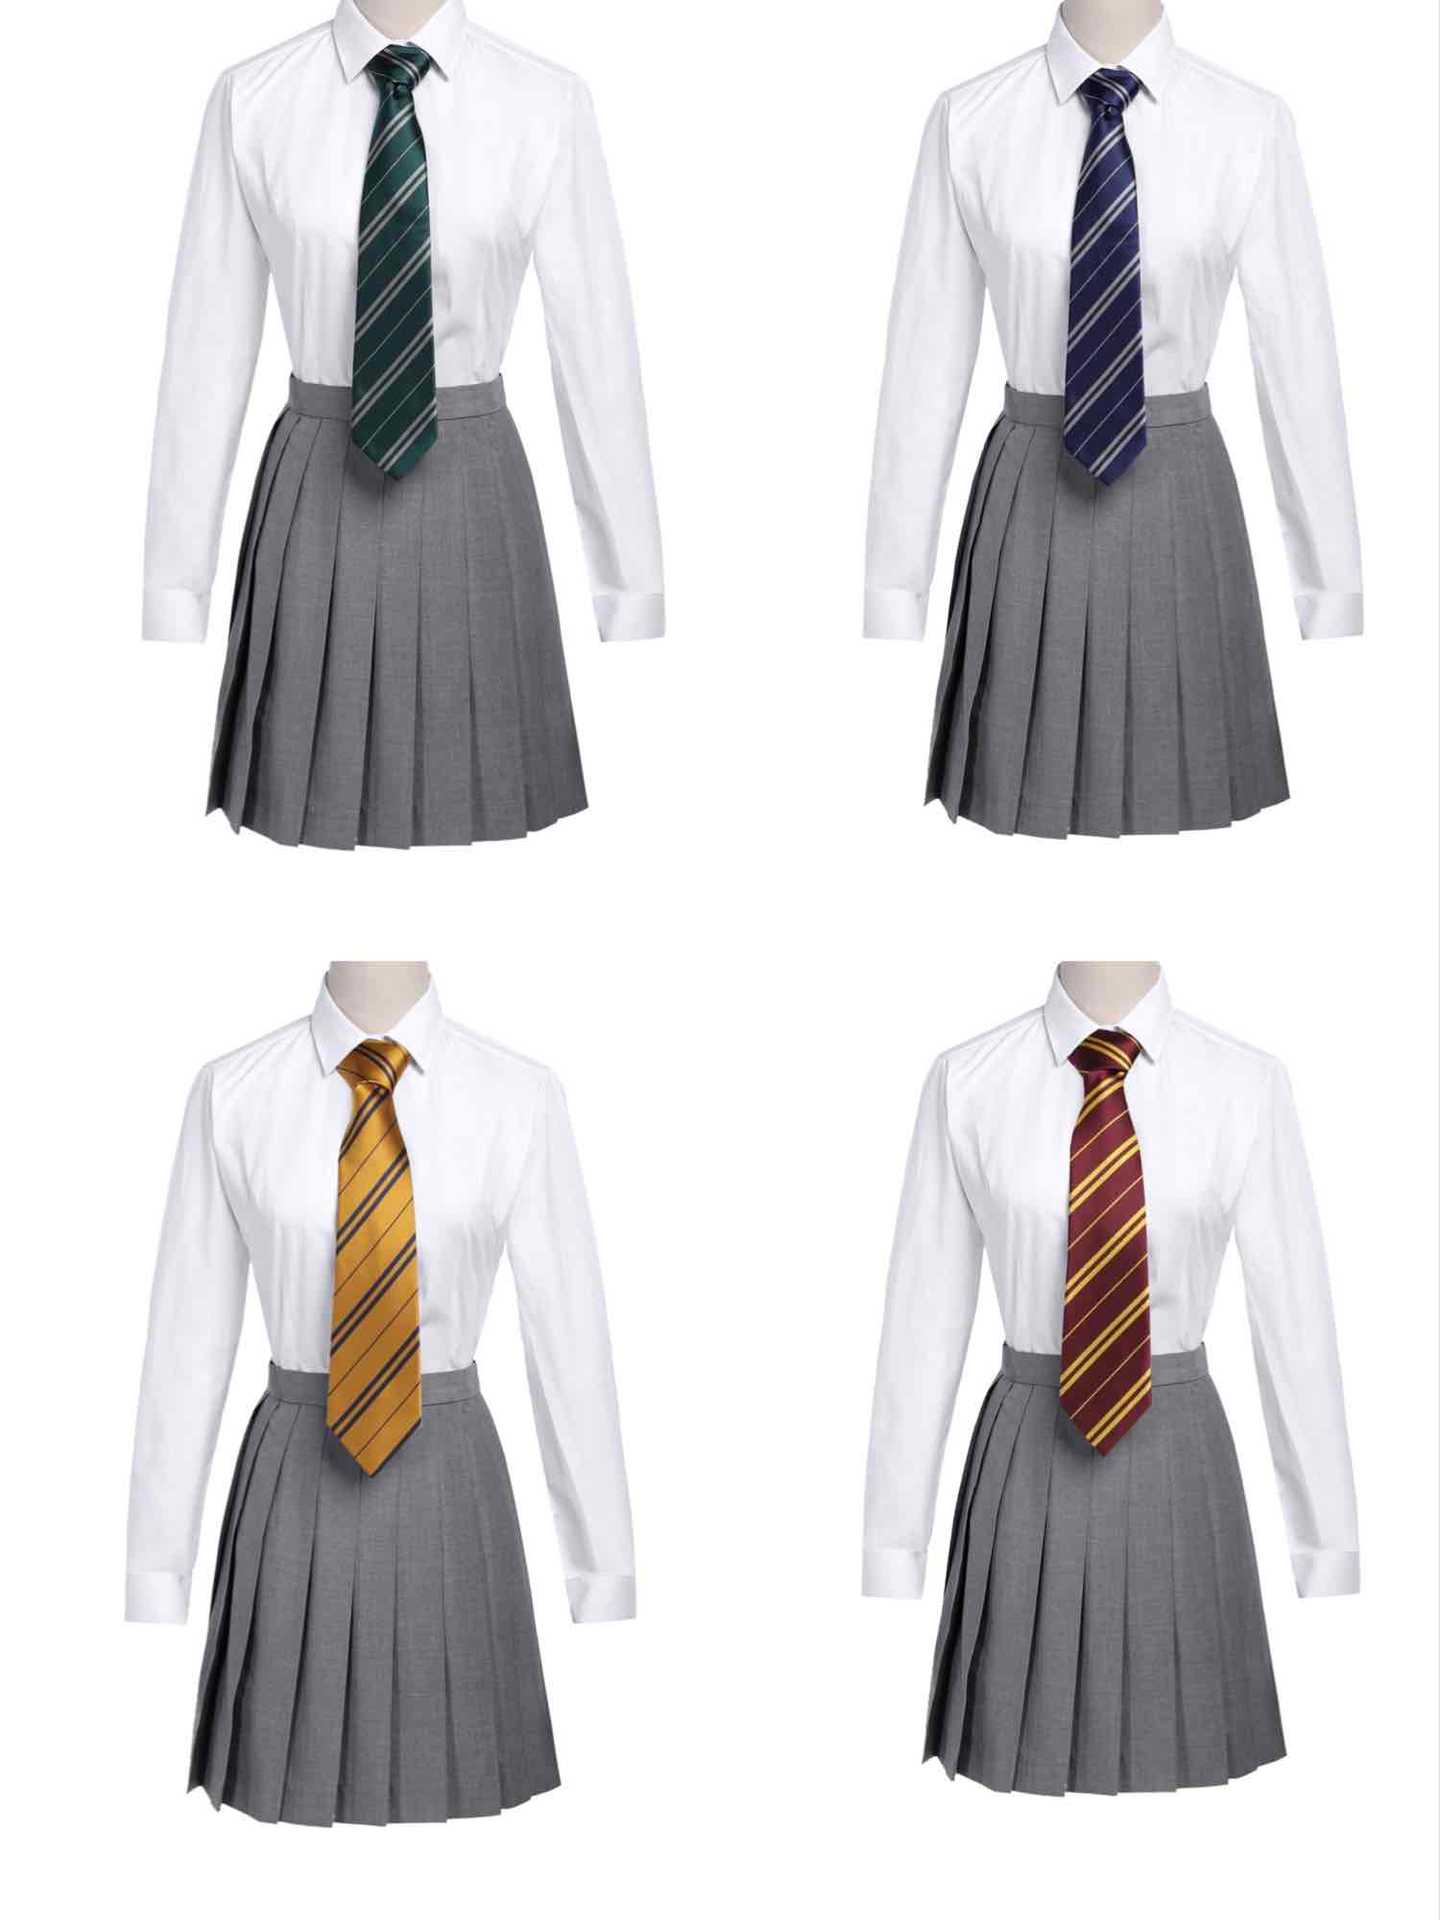 wholesale On behalf of Harry Baud periphery school uniform shirt cosplay Hermione College wind men and women White shirt